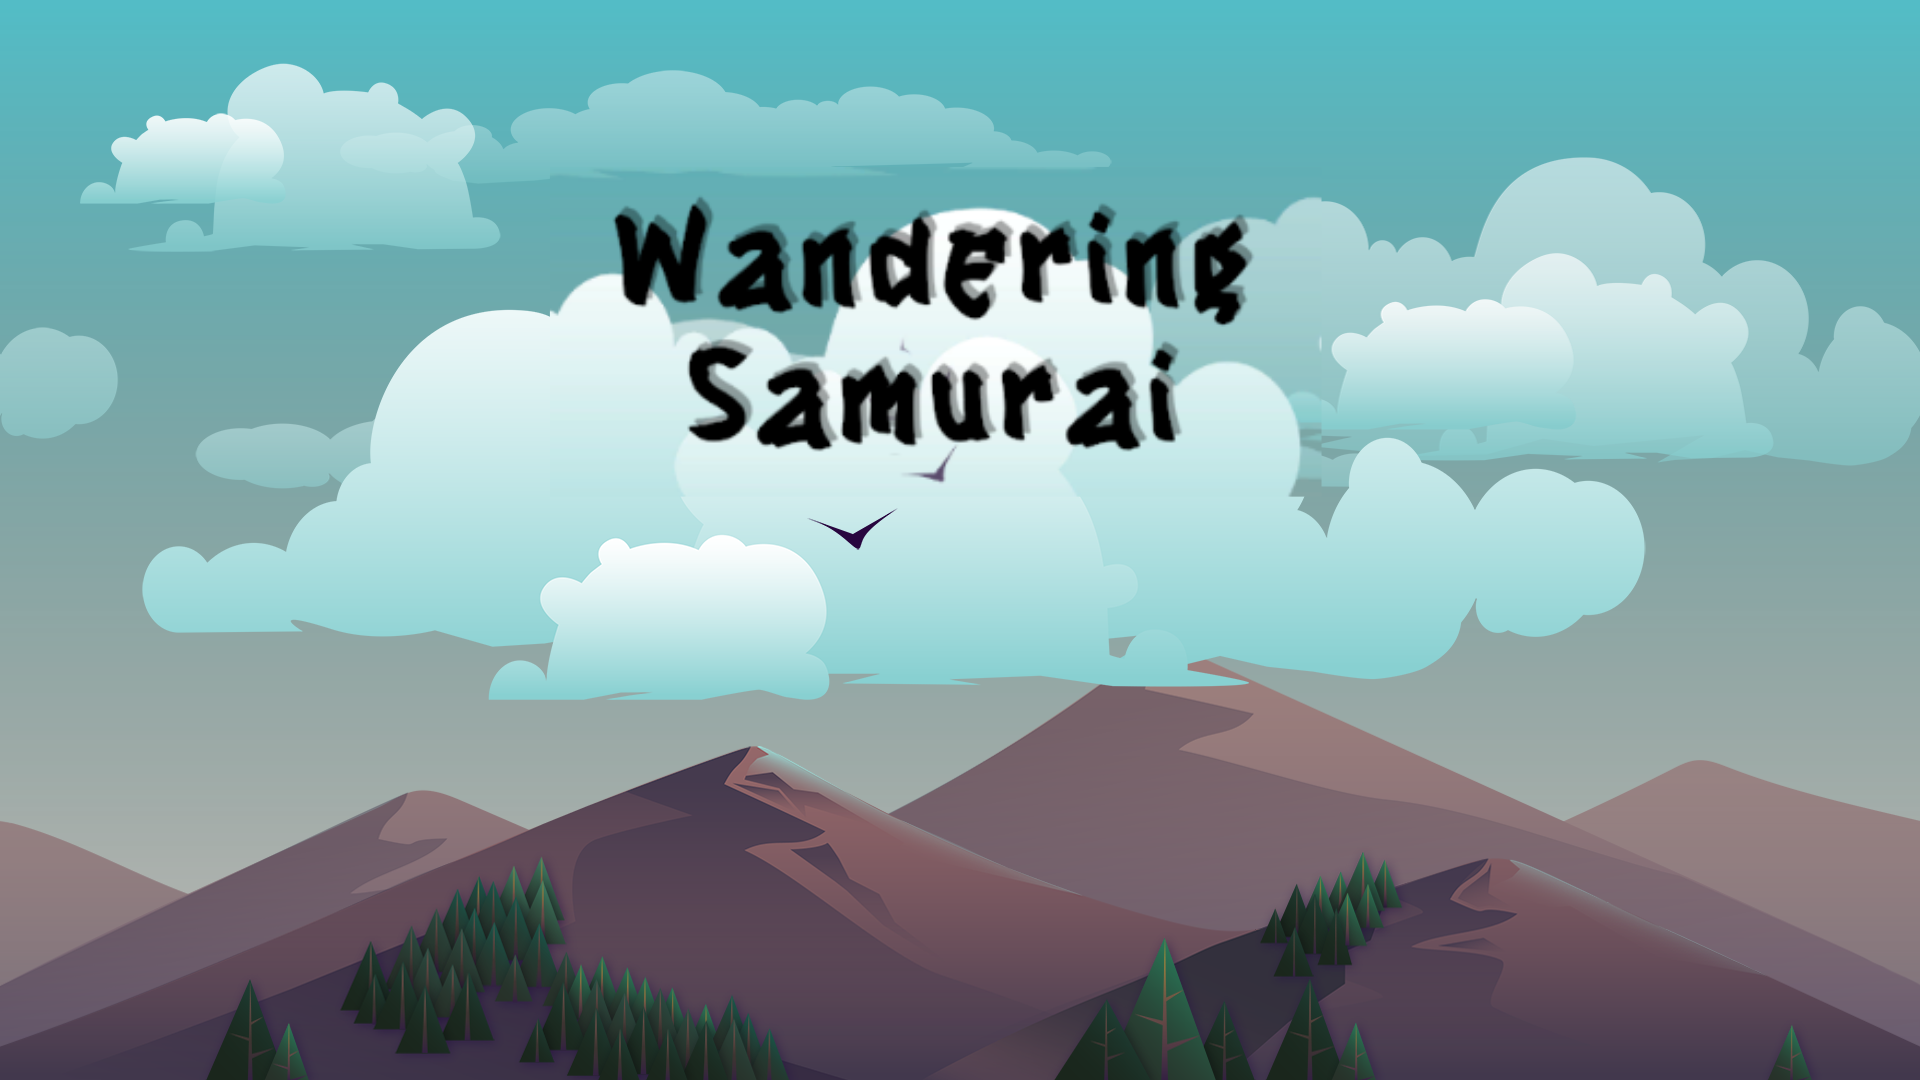 Wandering Samurai